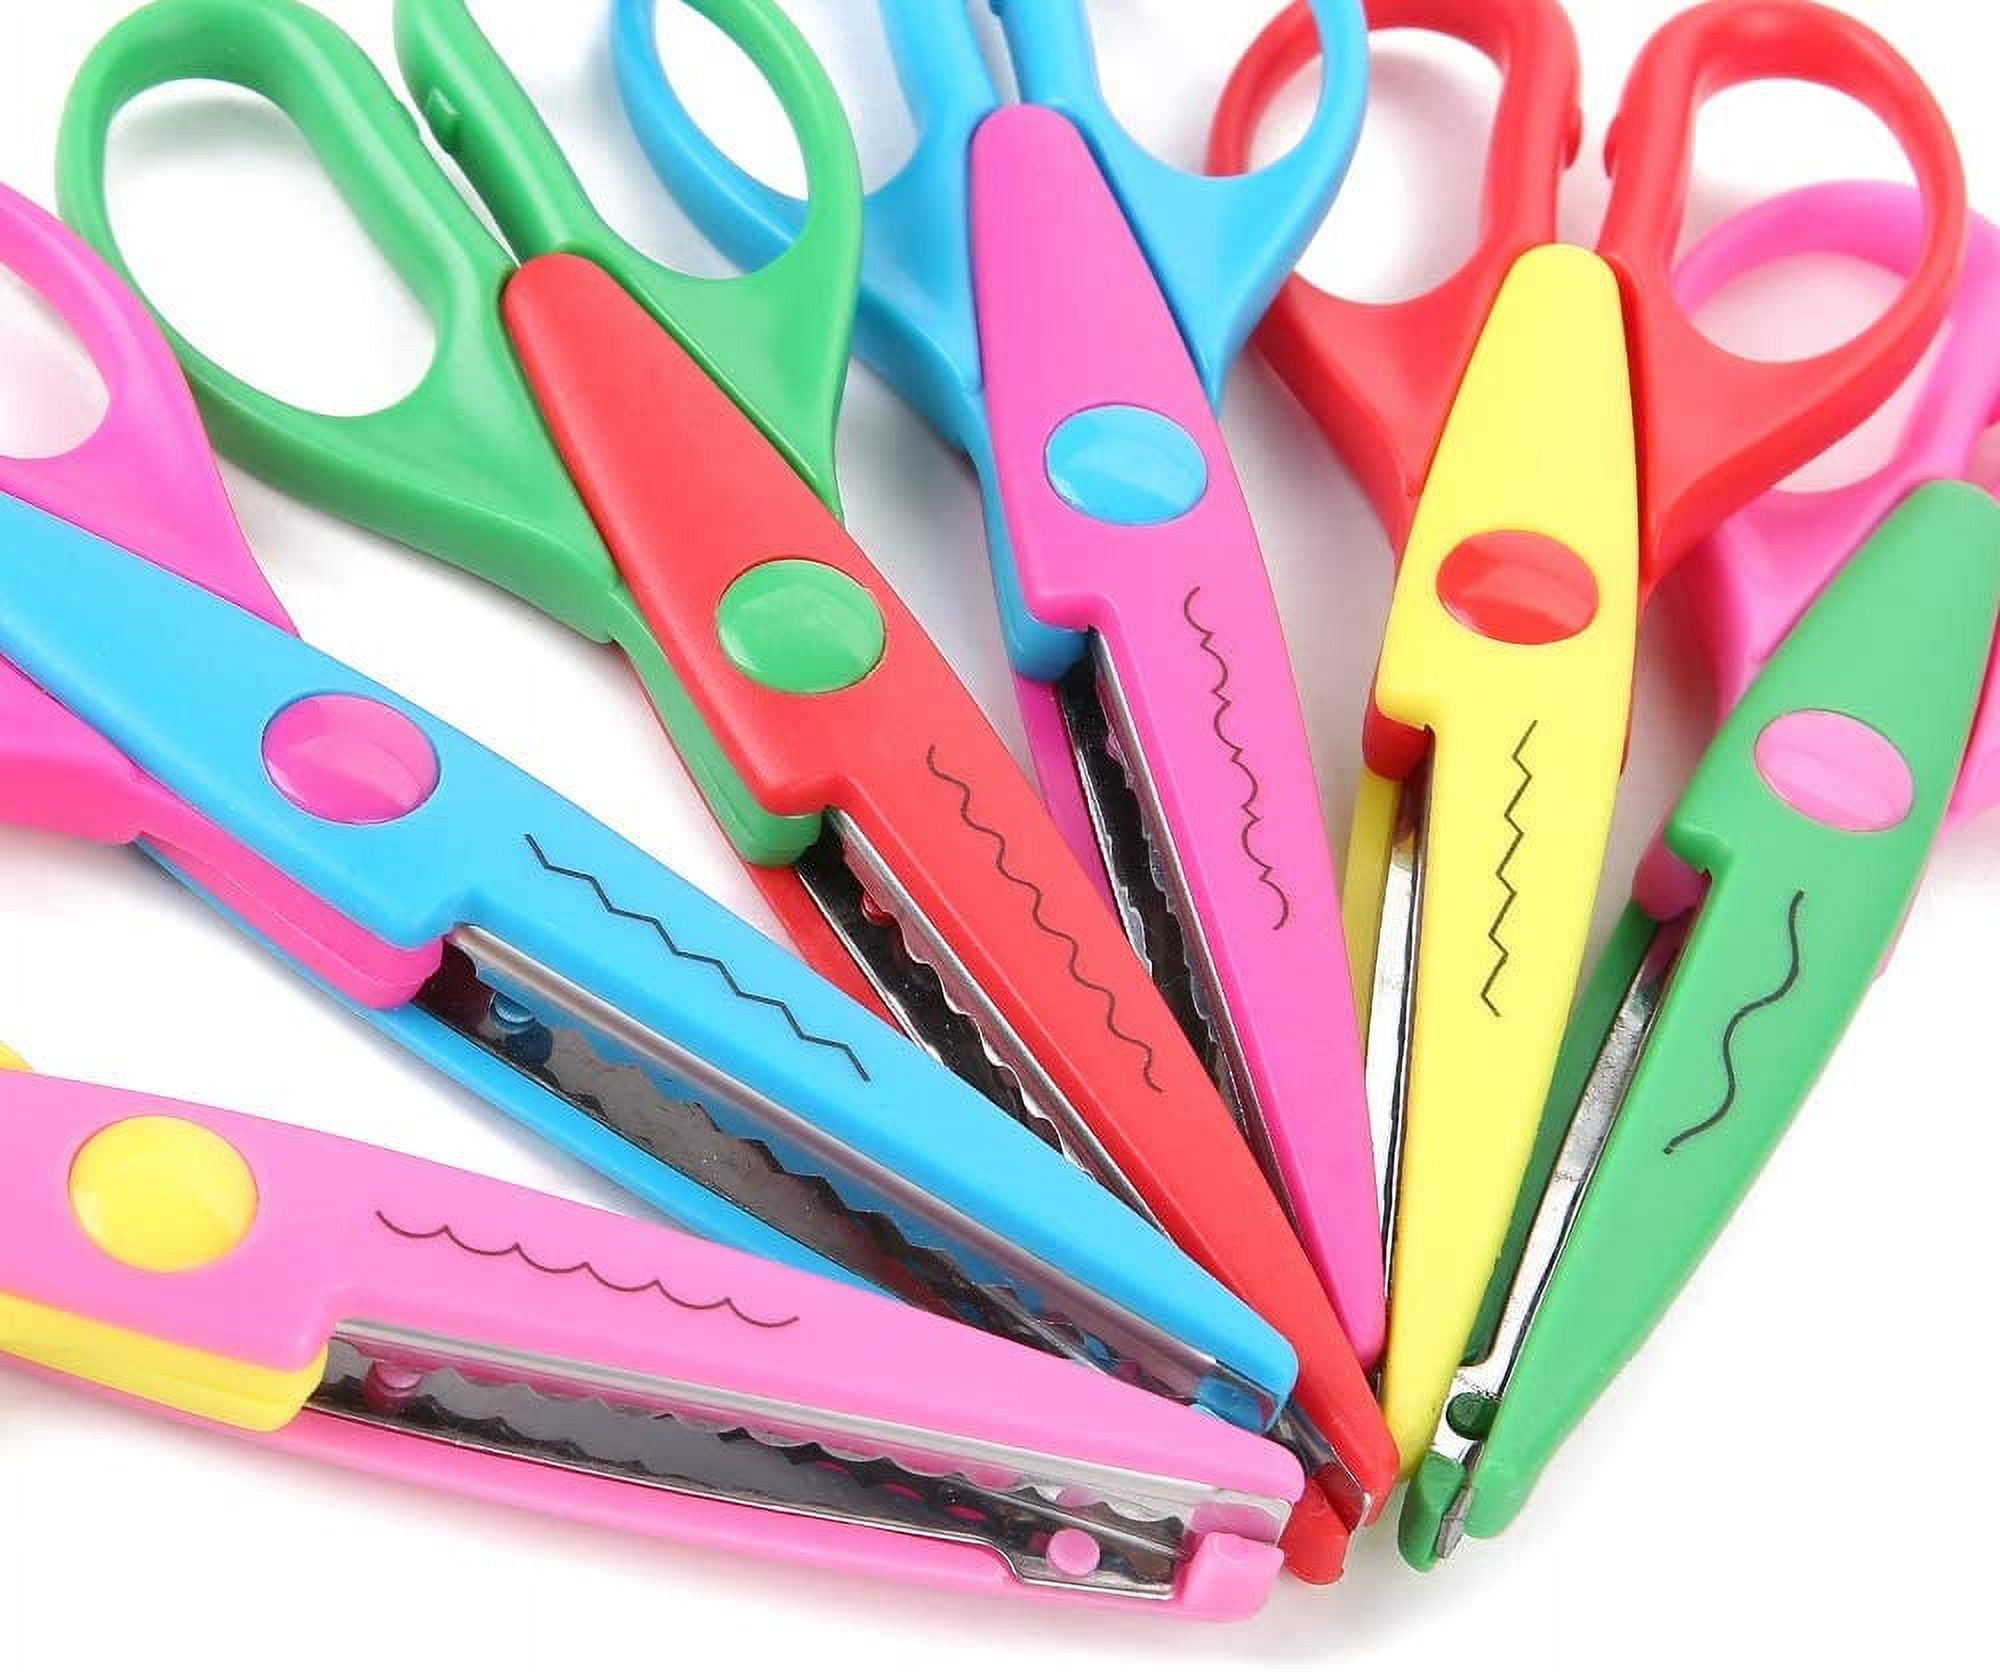 6pcs Craft Scrapbooking Scissors: Decorative Edge ABS Resin, Safe for Kids!